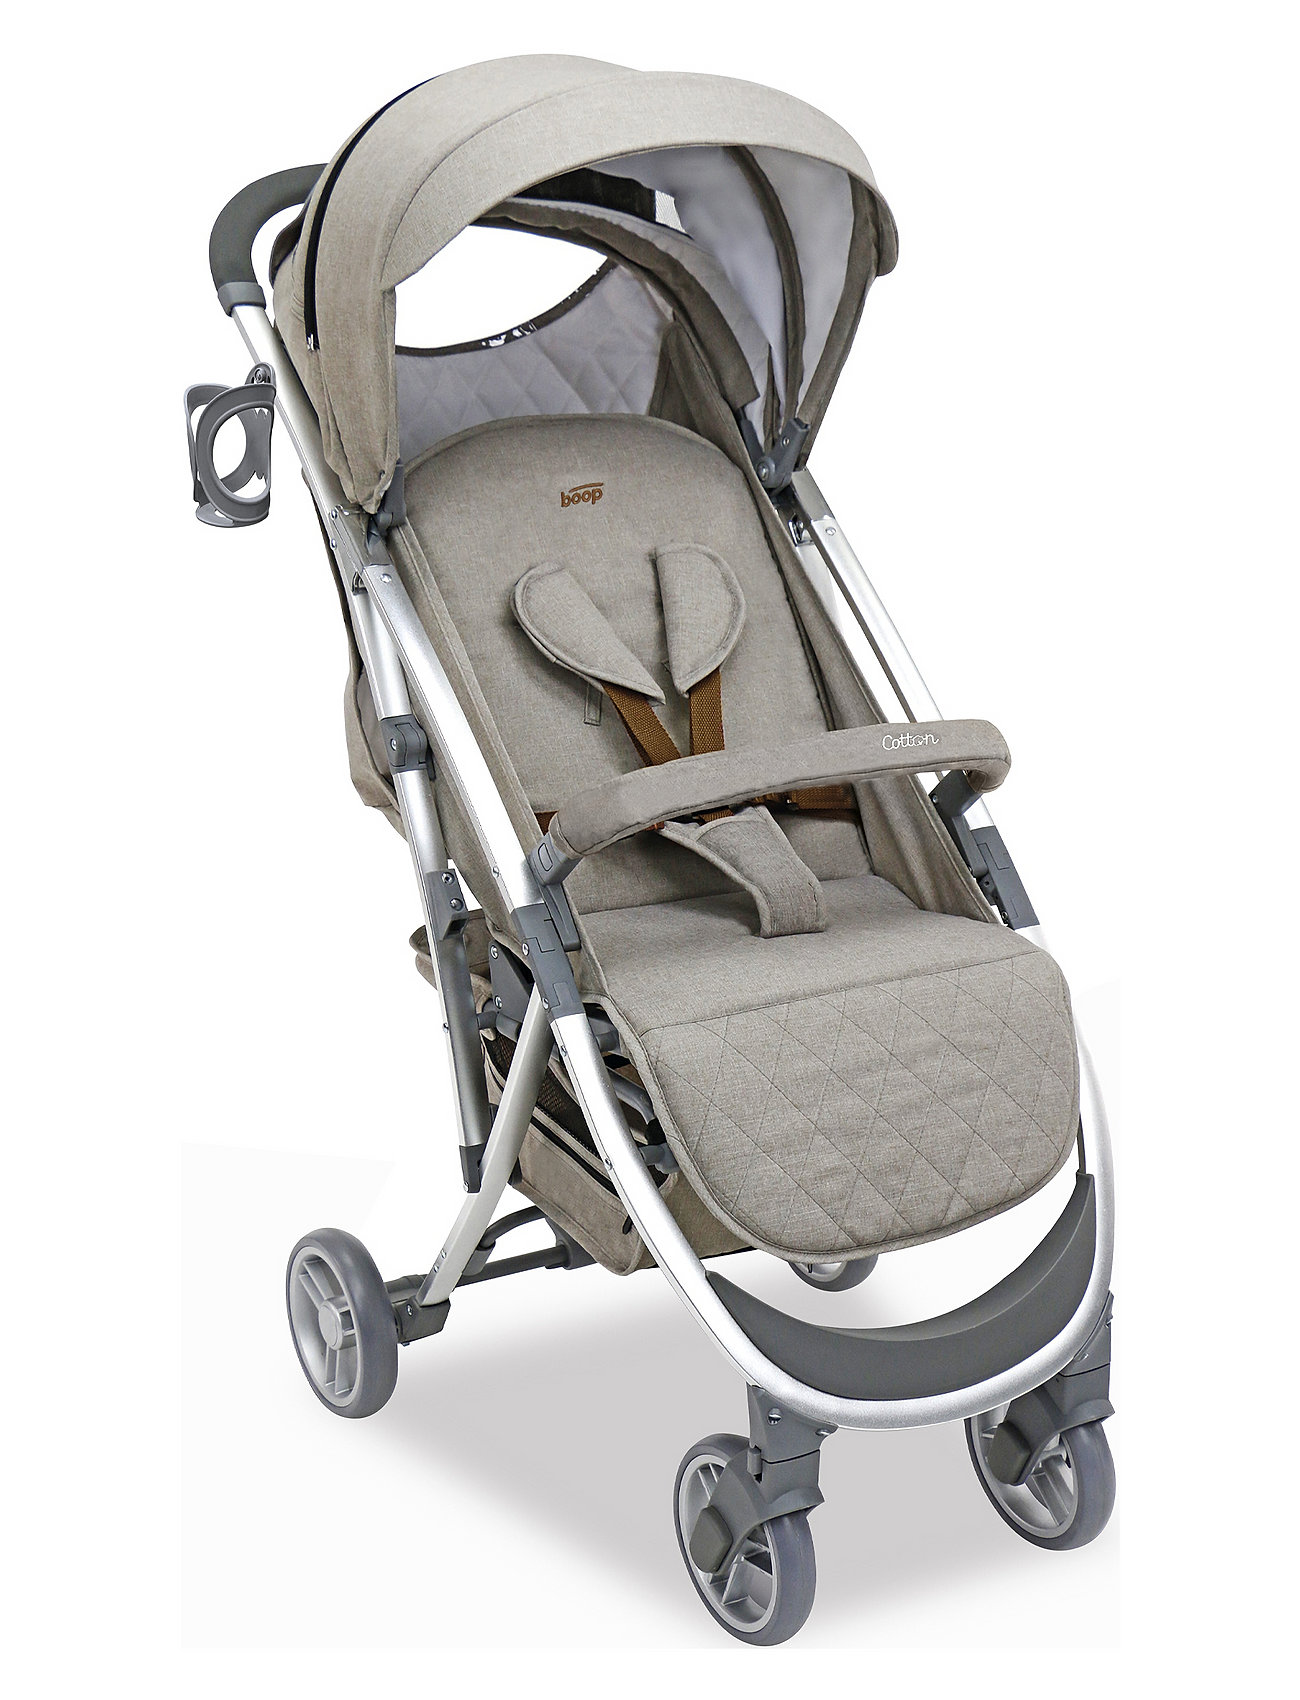 Asalvo Pushchair Cotton, Beige Baby & Maternity Strollers & Accessories Strollers Beige Asalvo